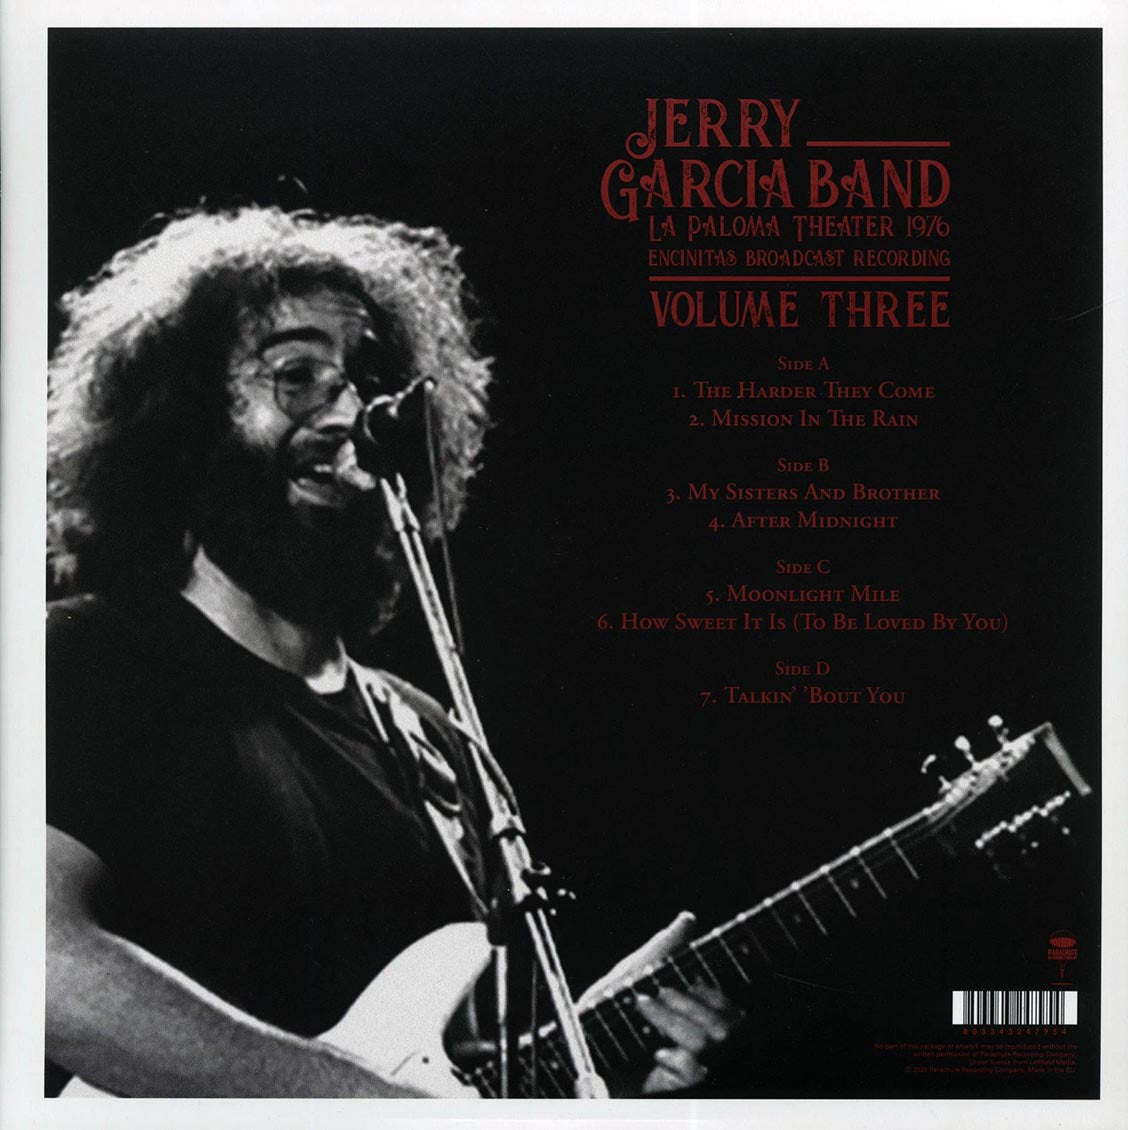 The Jerry Garcia Band - La Paloma Theater 1976 Volume 3: Encinitas Broadcast Recording (2xLP) - Vinyl LP, LP